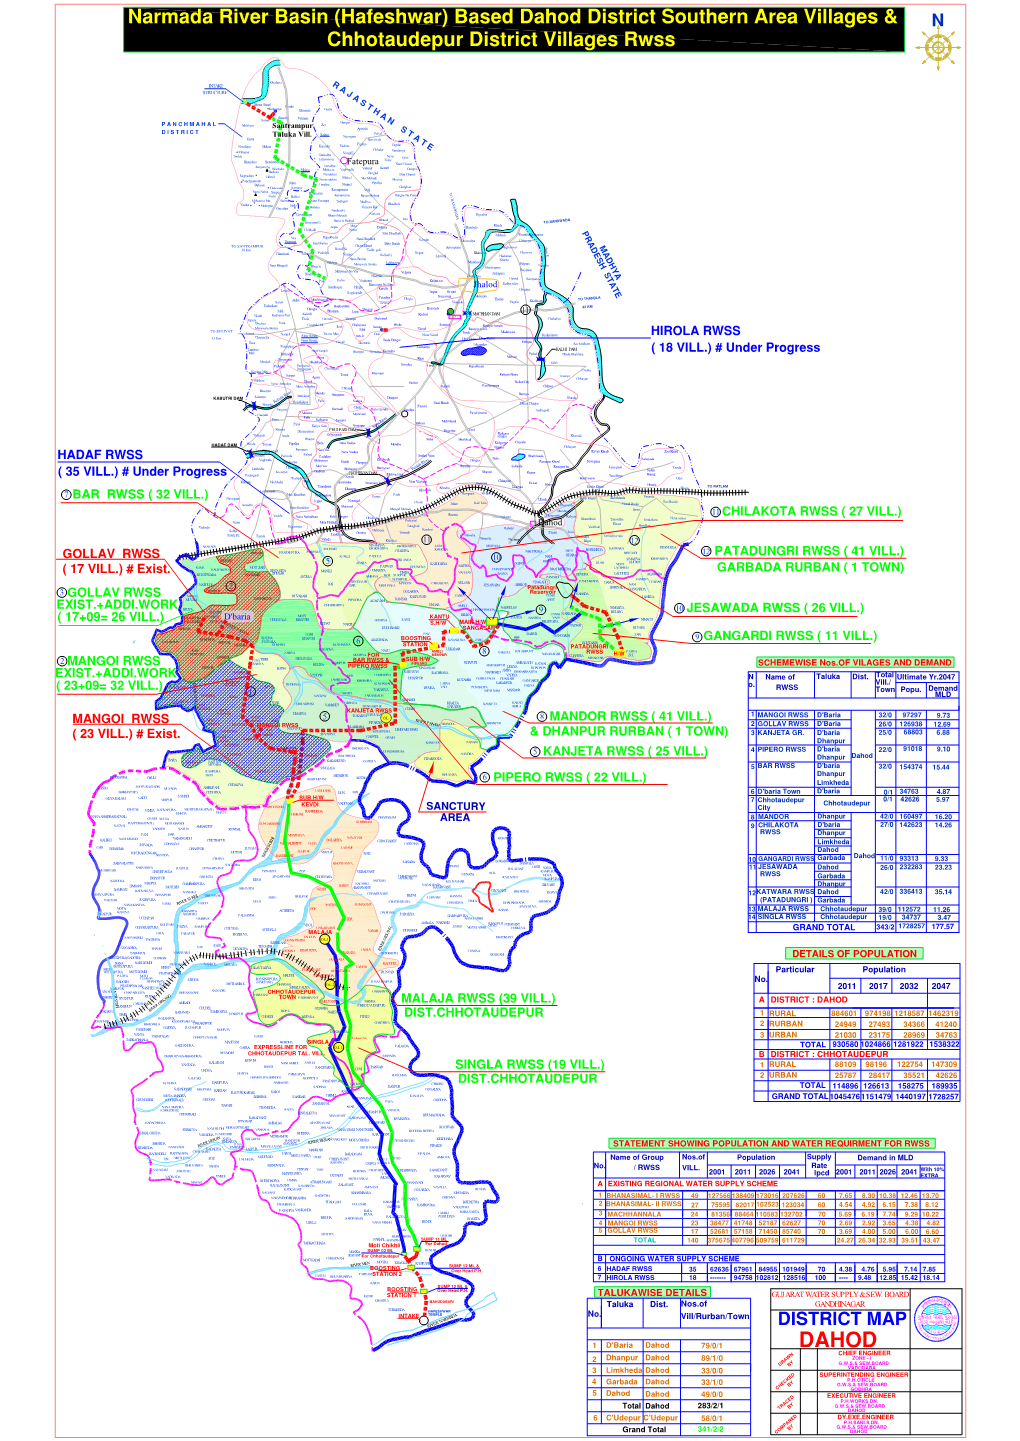 Narmada River Basin (Hafeshwar) Based Dahod District Southern Area Villages & Chhotaudepur District Villages Rwss